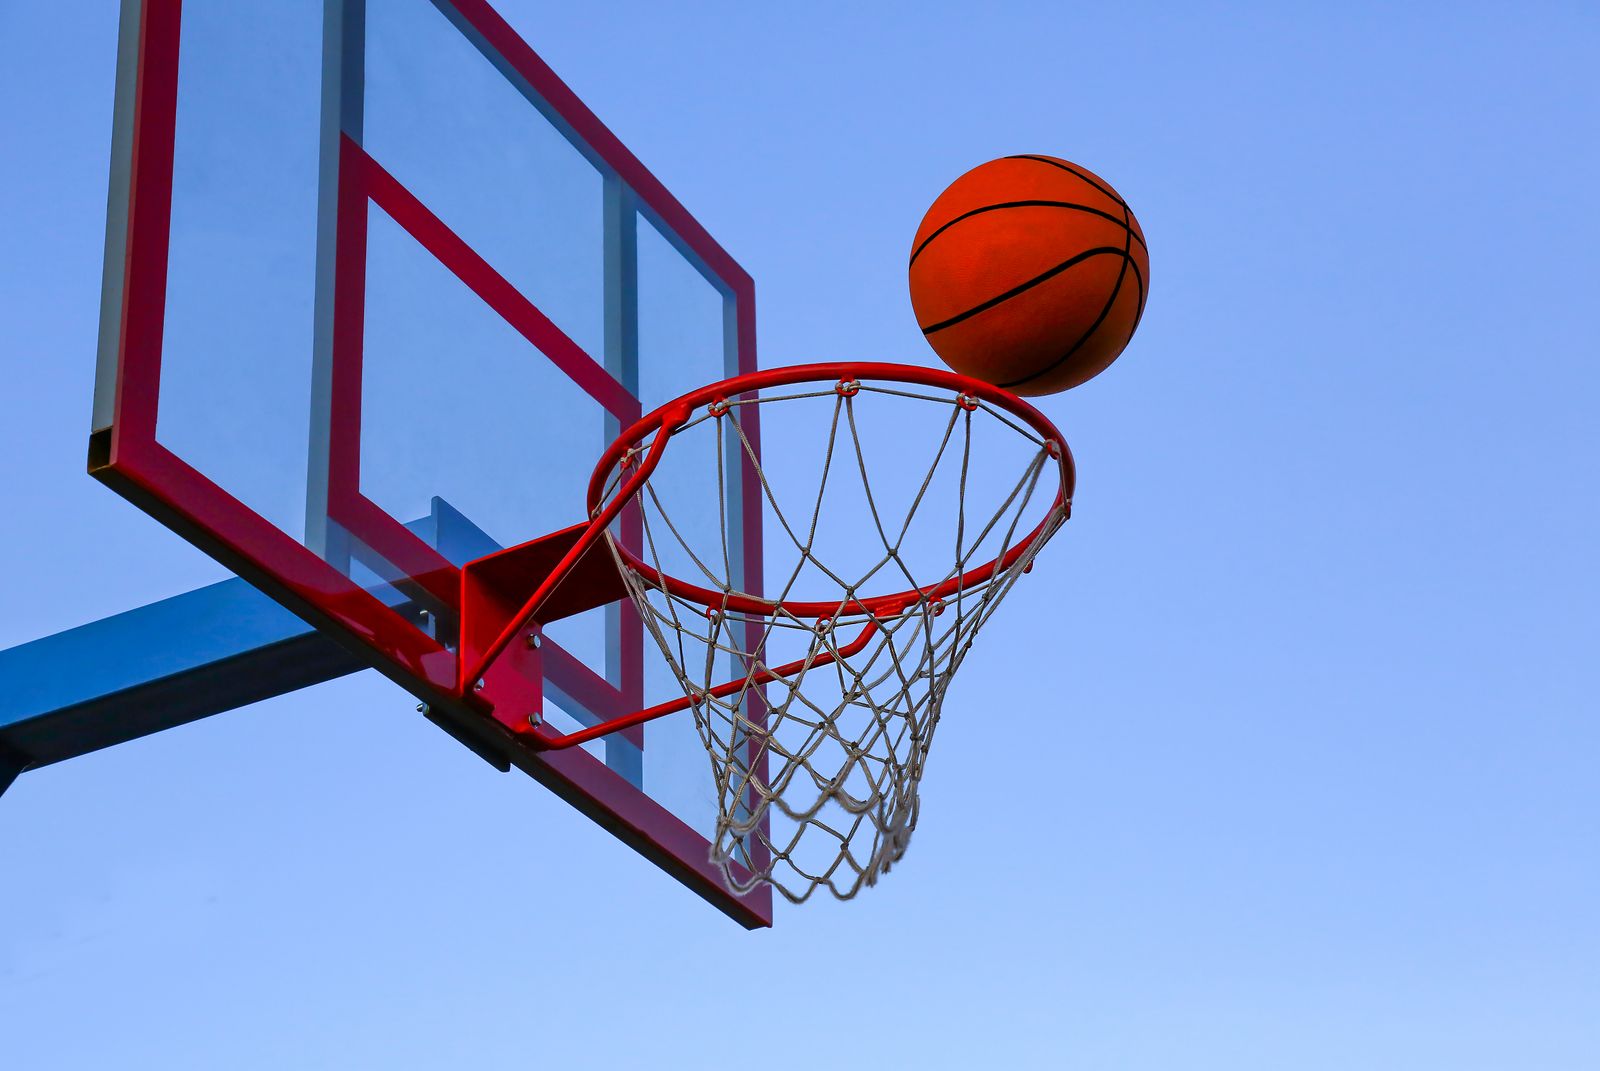 Basketball system